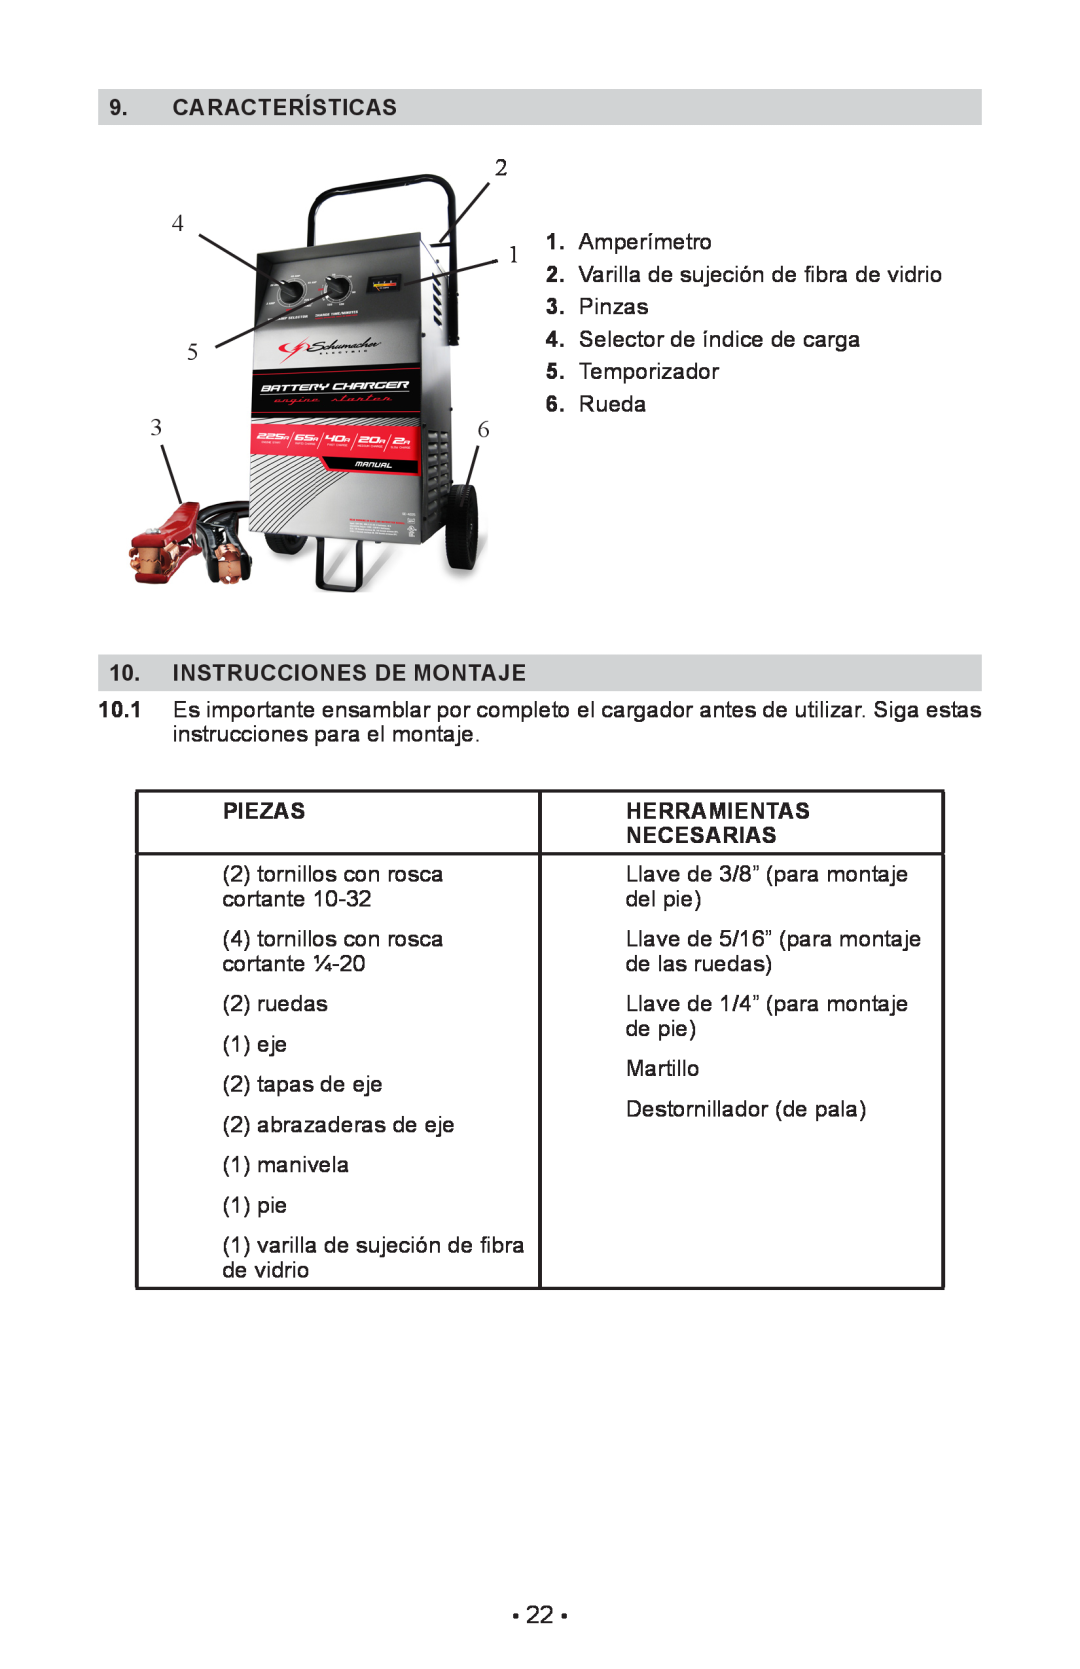 Schumacher SE-4225 Características, Amperímetro, Varilla de sujeción de fibra de vidrio, Pinzas, Temporizador, Rueda 